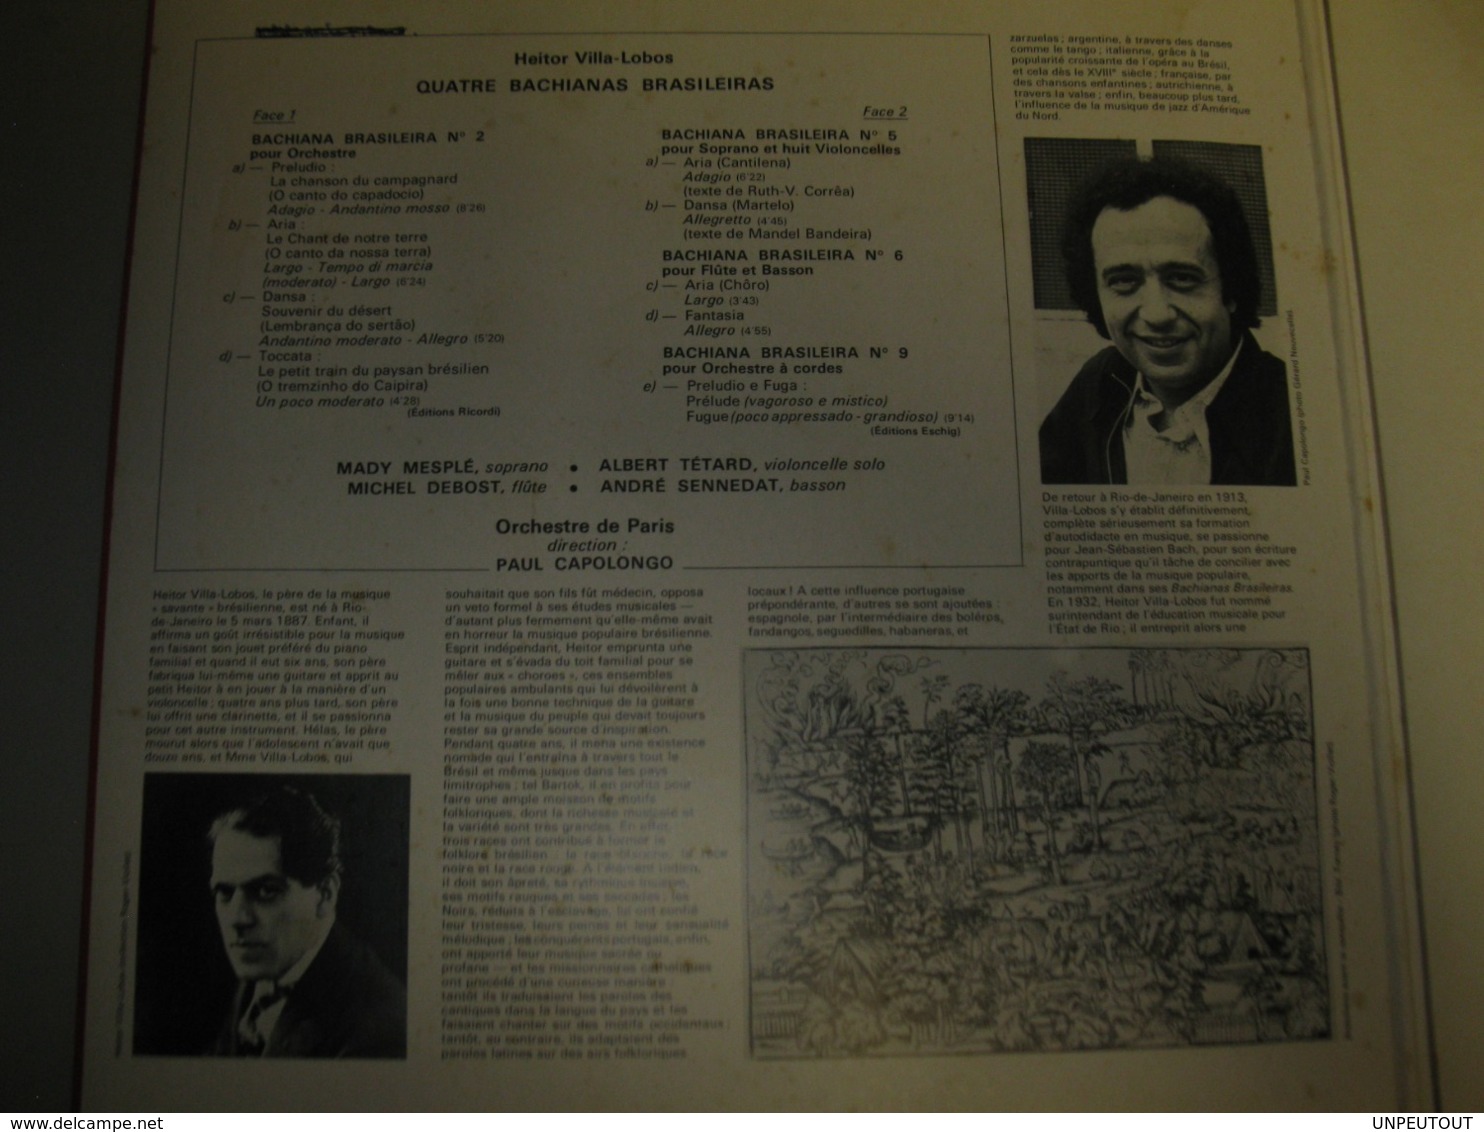 VINYLE VILLA-LOBOS "BACHIANAS BRASILEIRAS" 33 T LA VOIX DE SON MAITRE (1973) - Klassik